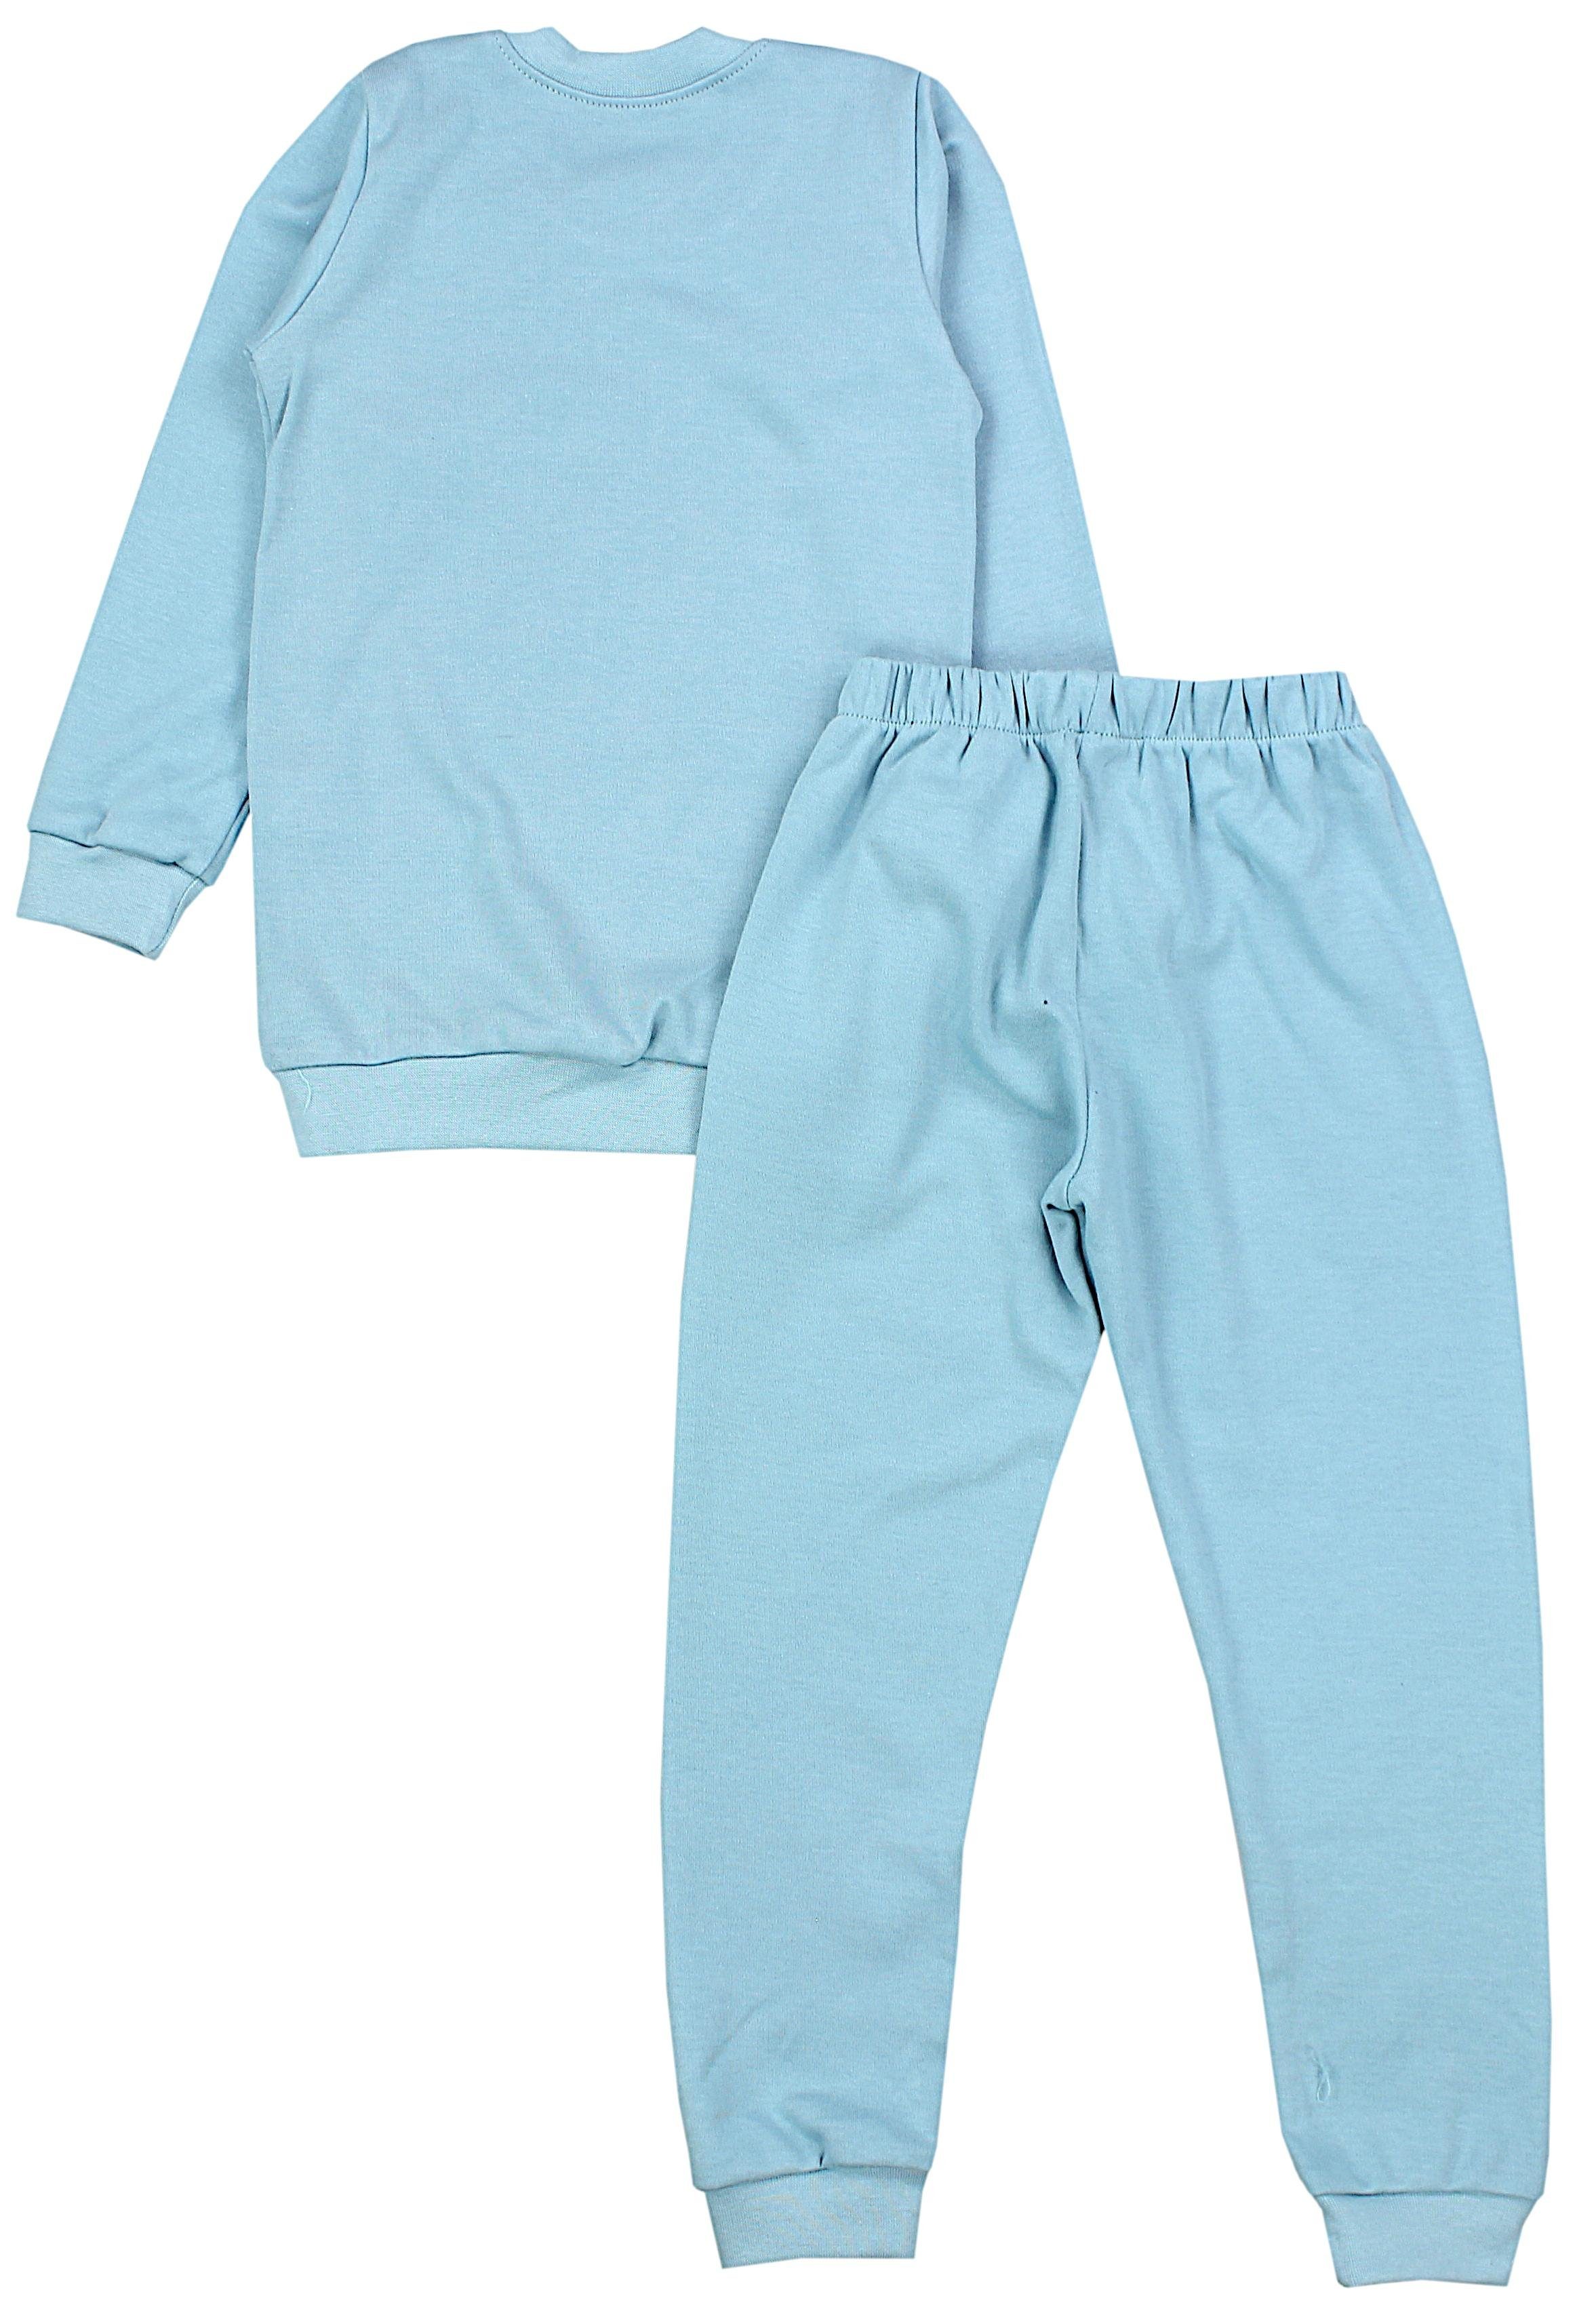 Nachtwäsche Langarm Mintgrün Schlafanzug Schlafanzug Kinder TupTam Set Teddybär Mädchen NICE 2-teilig Pyjama